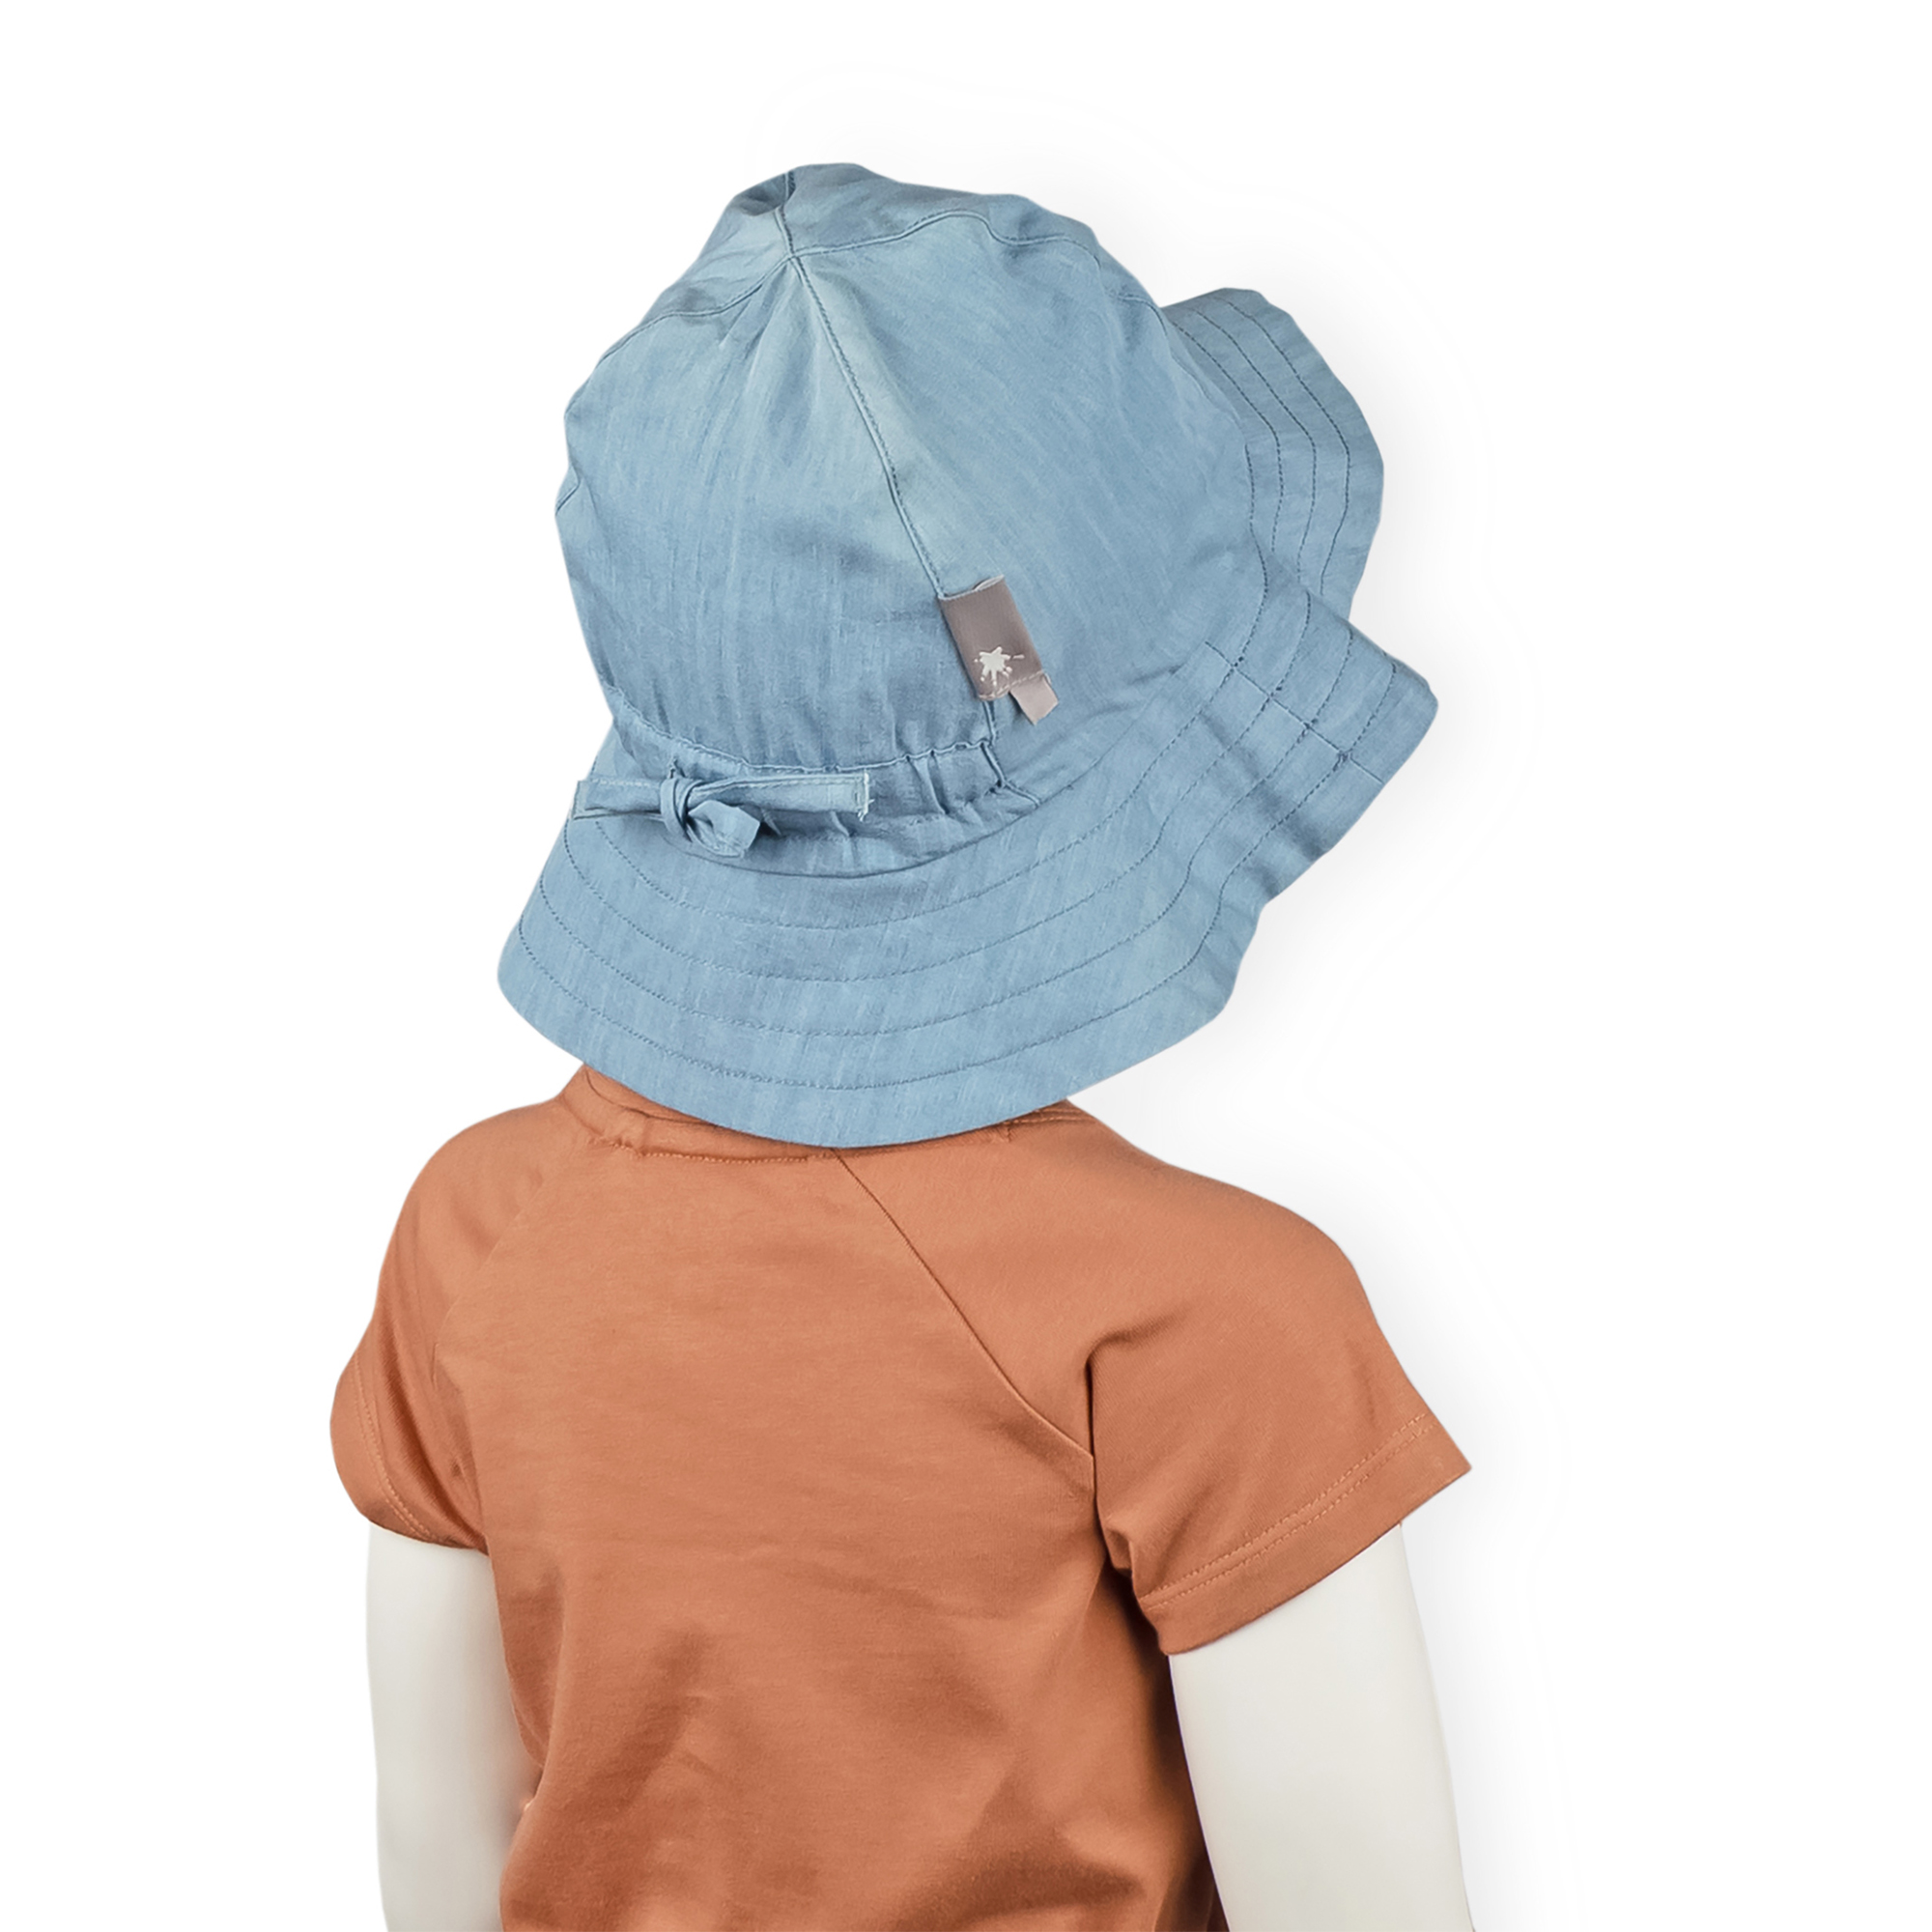 Brimmed kids' sun hat, denim light blue